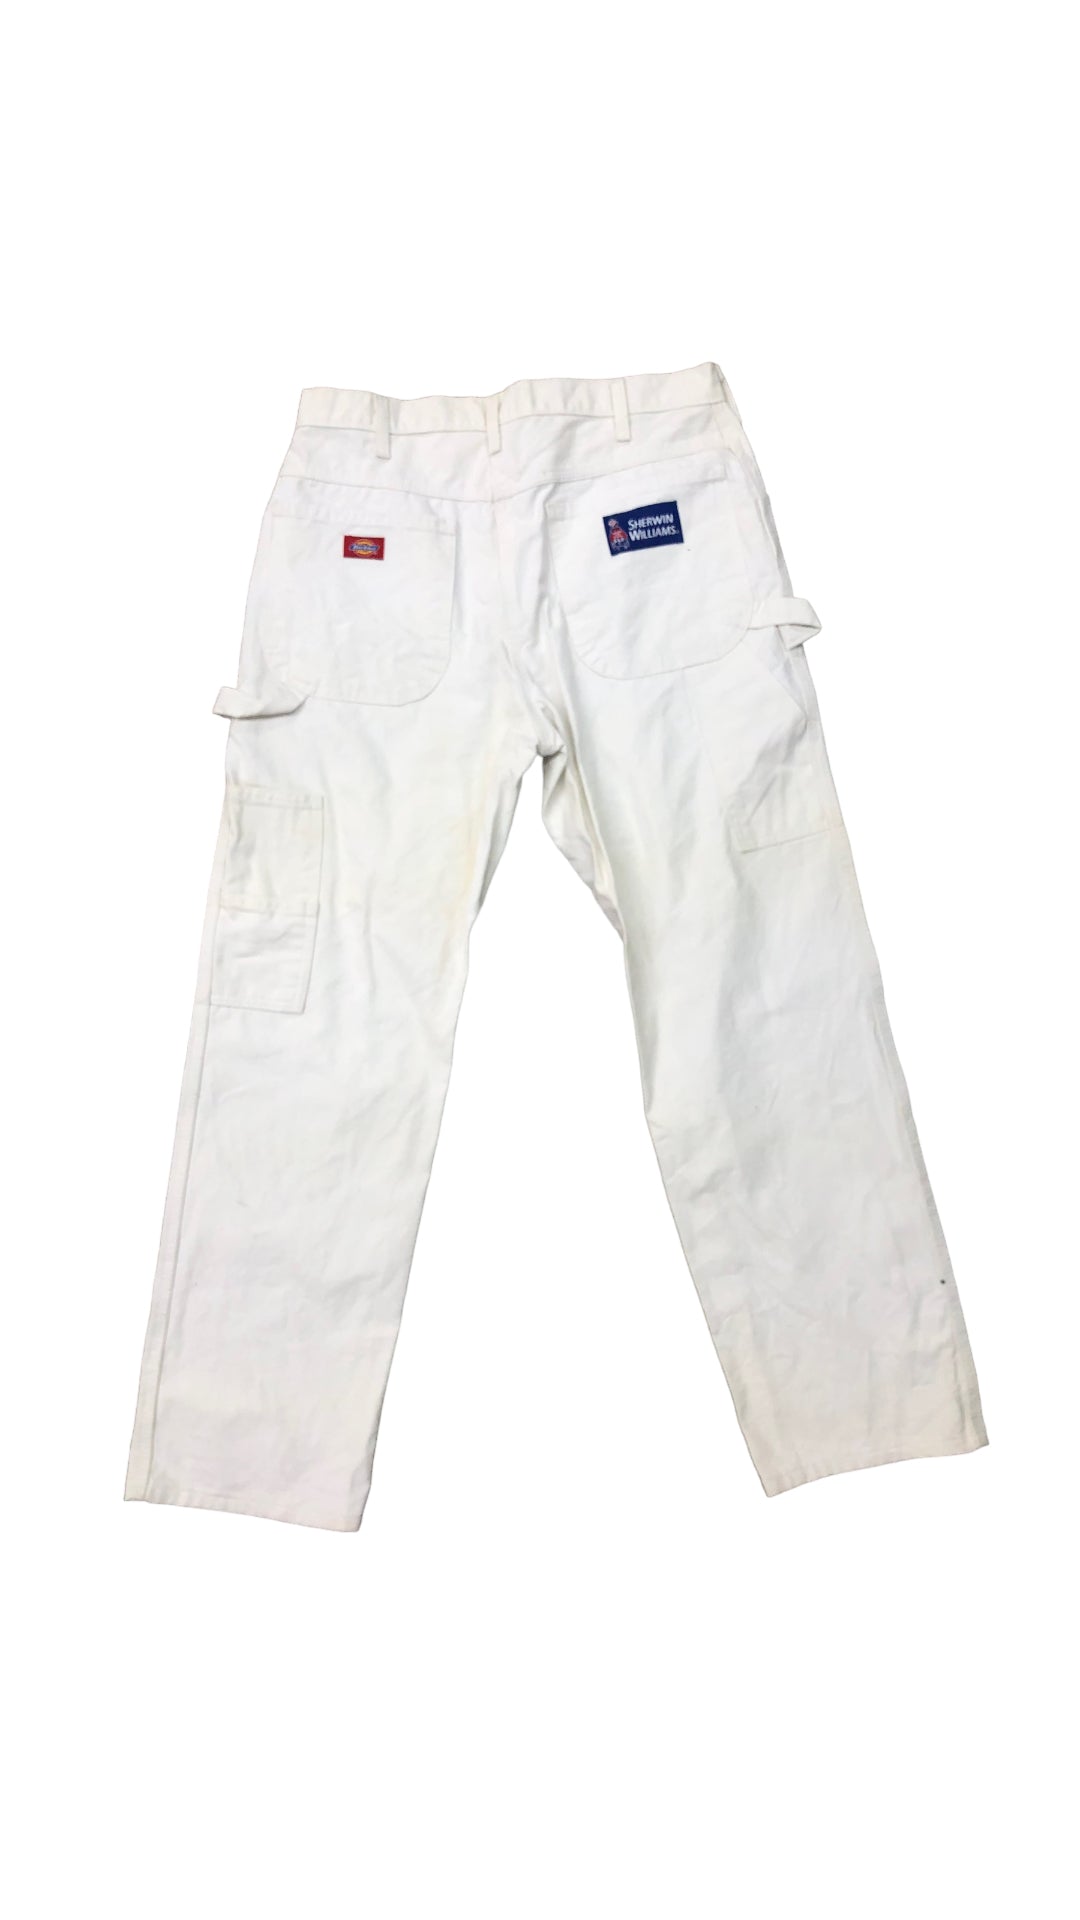 VTG White Dickies Jeans Sz 32x29